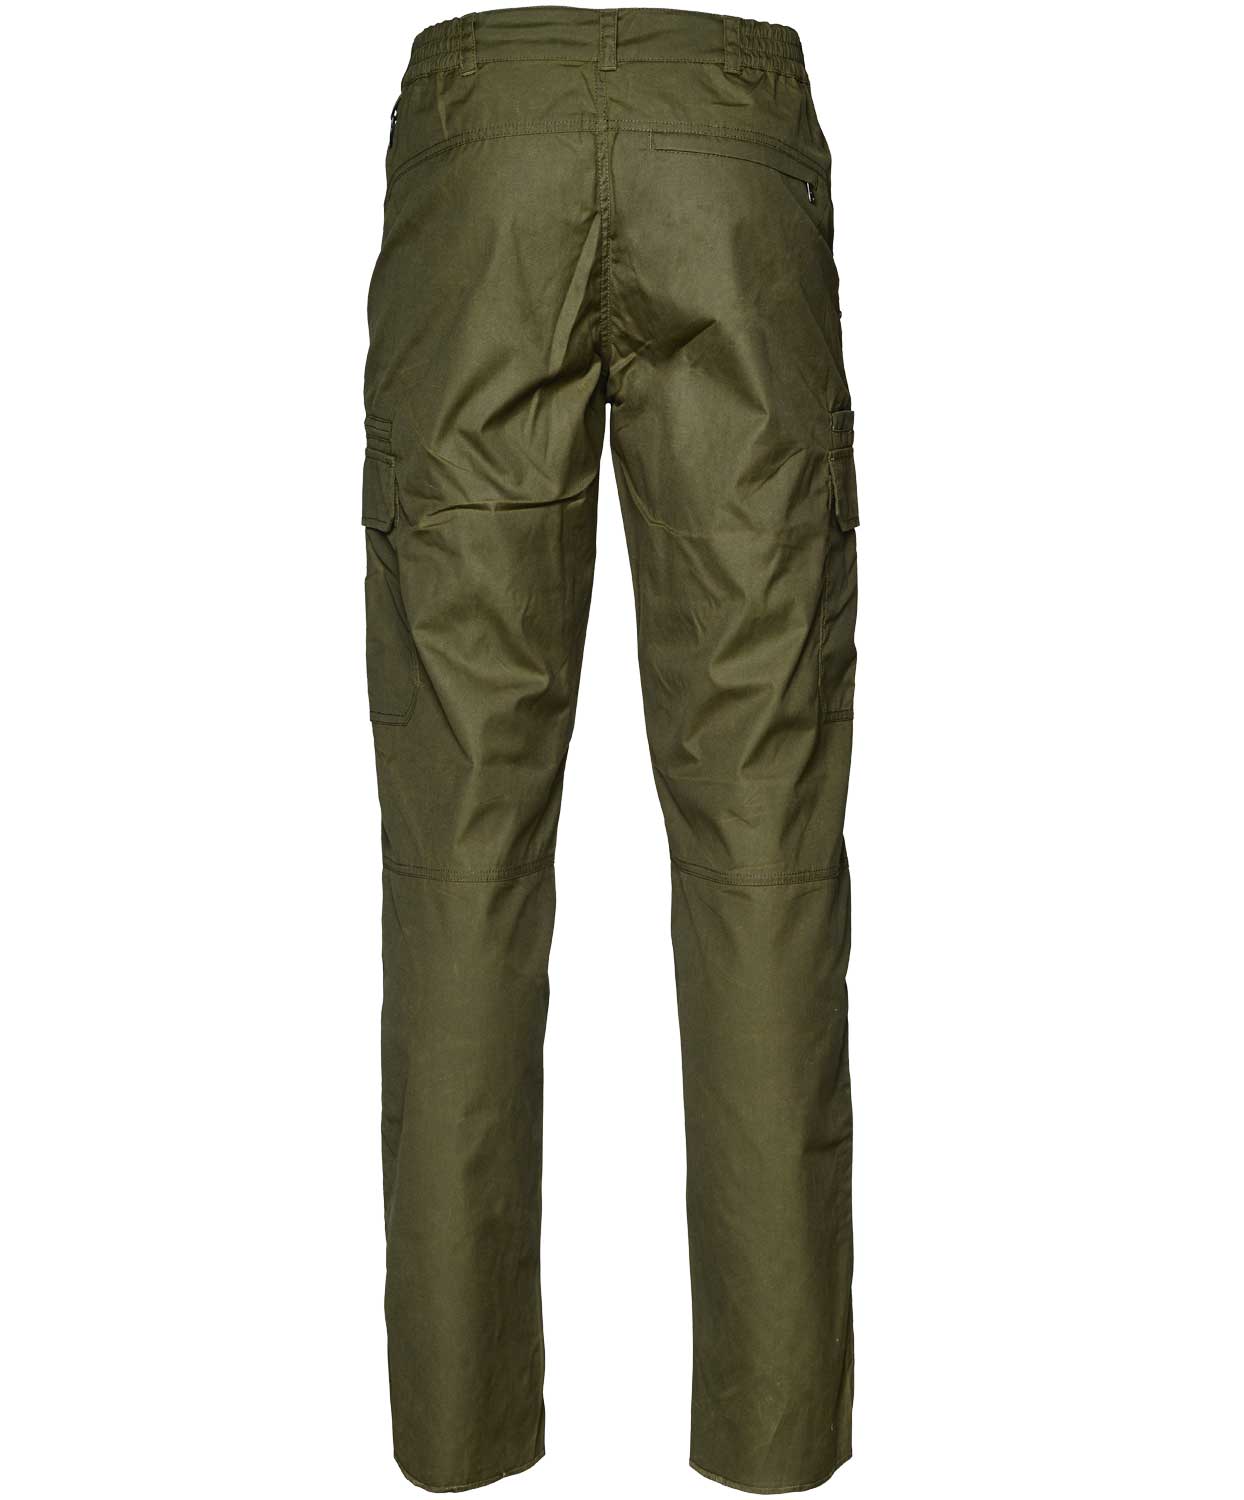 Seeland Men's Key-Point Trousers - Pine Green